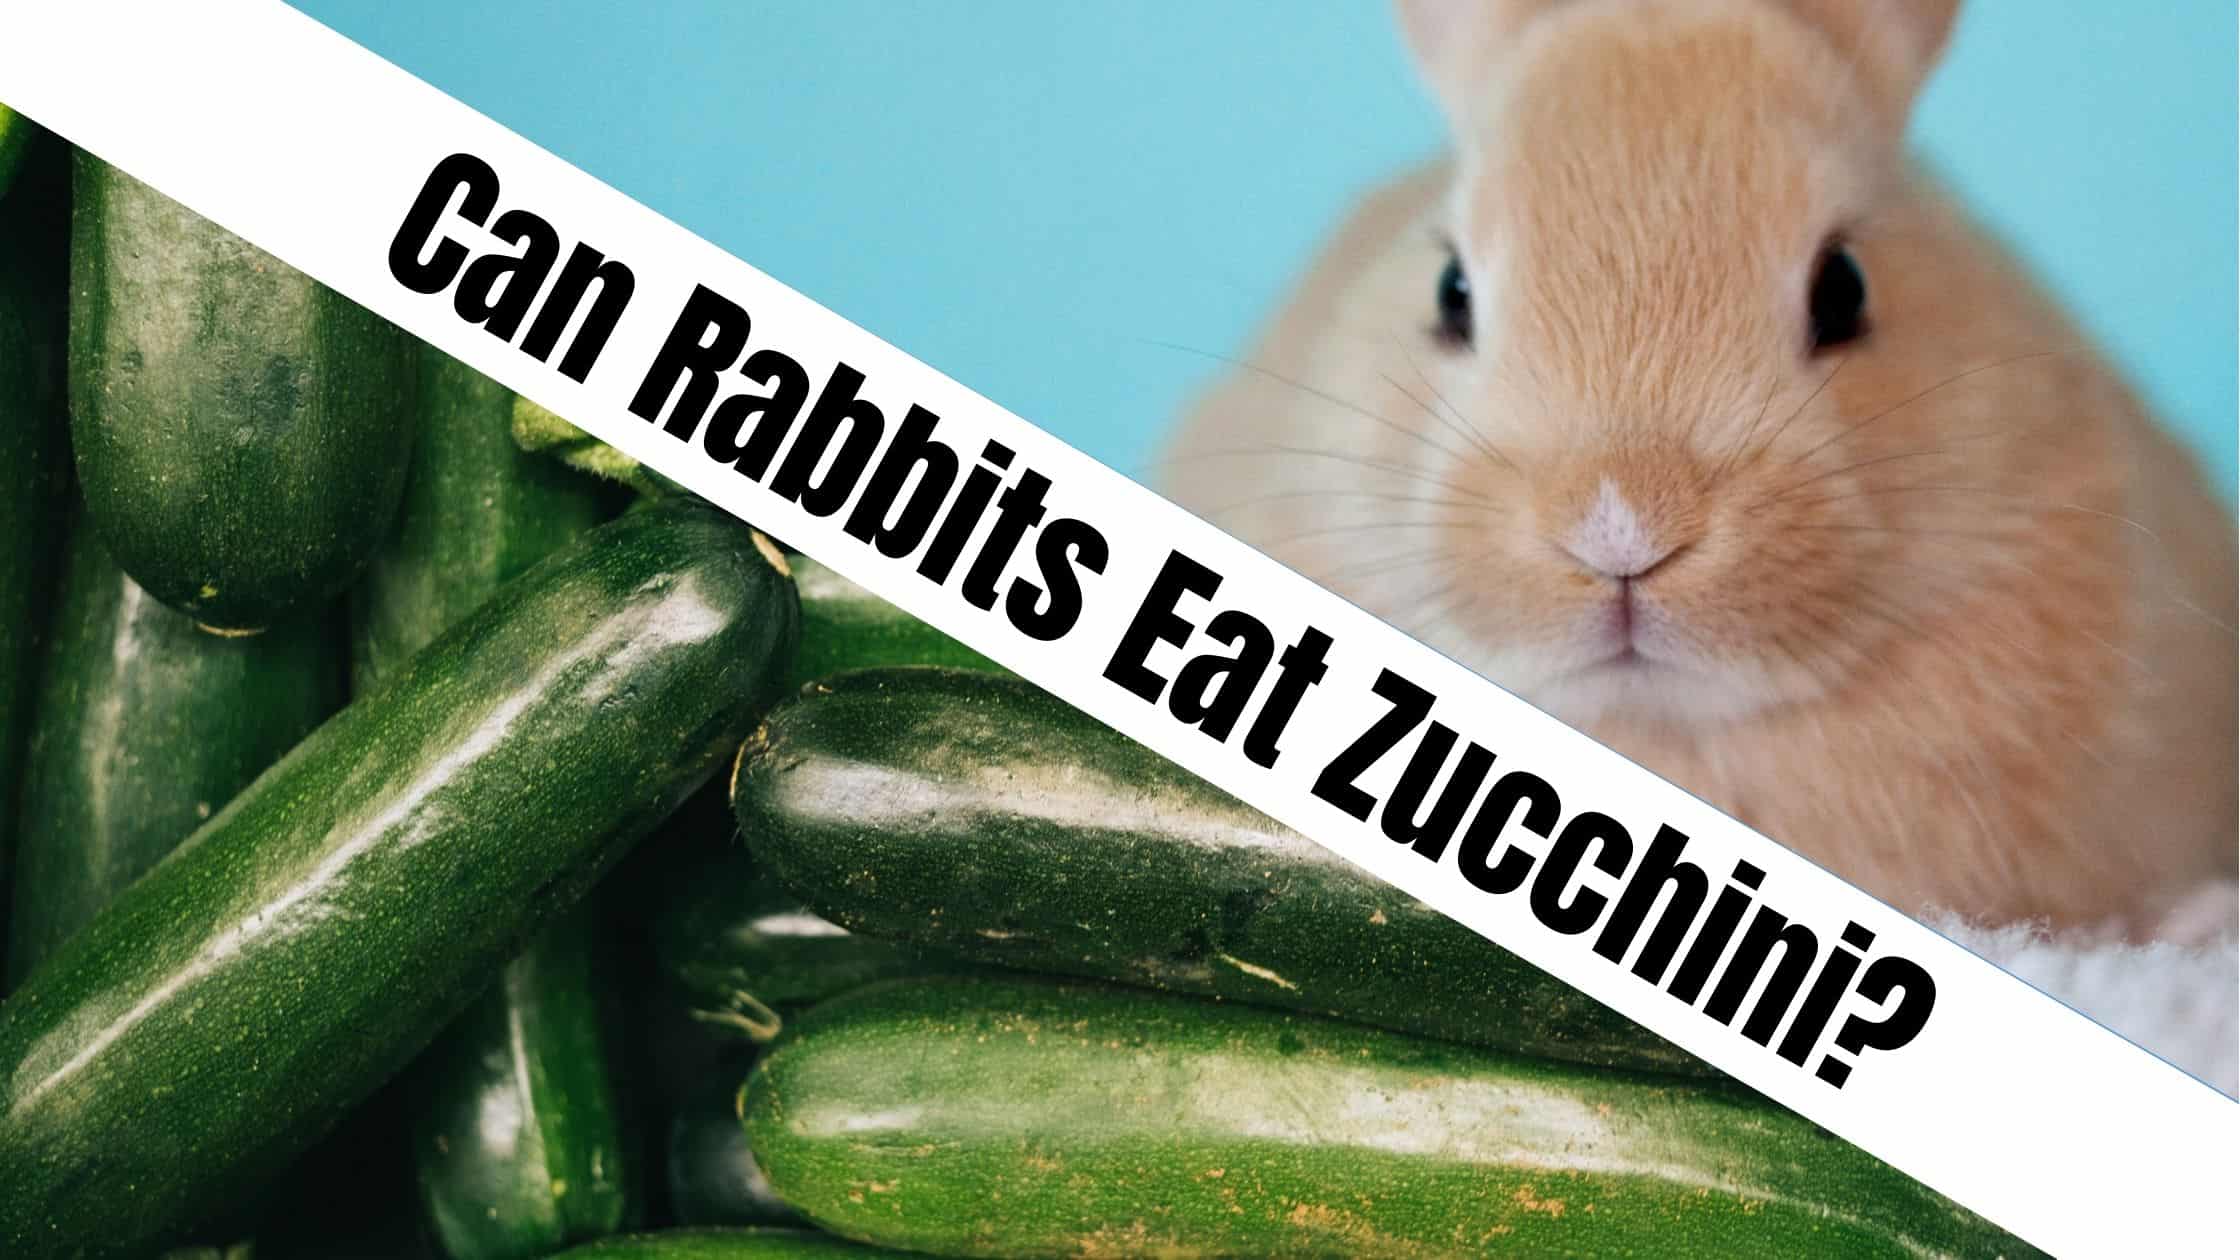 Can Rabbits Eat Zucchini?